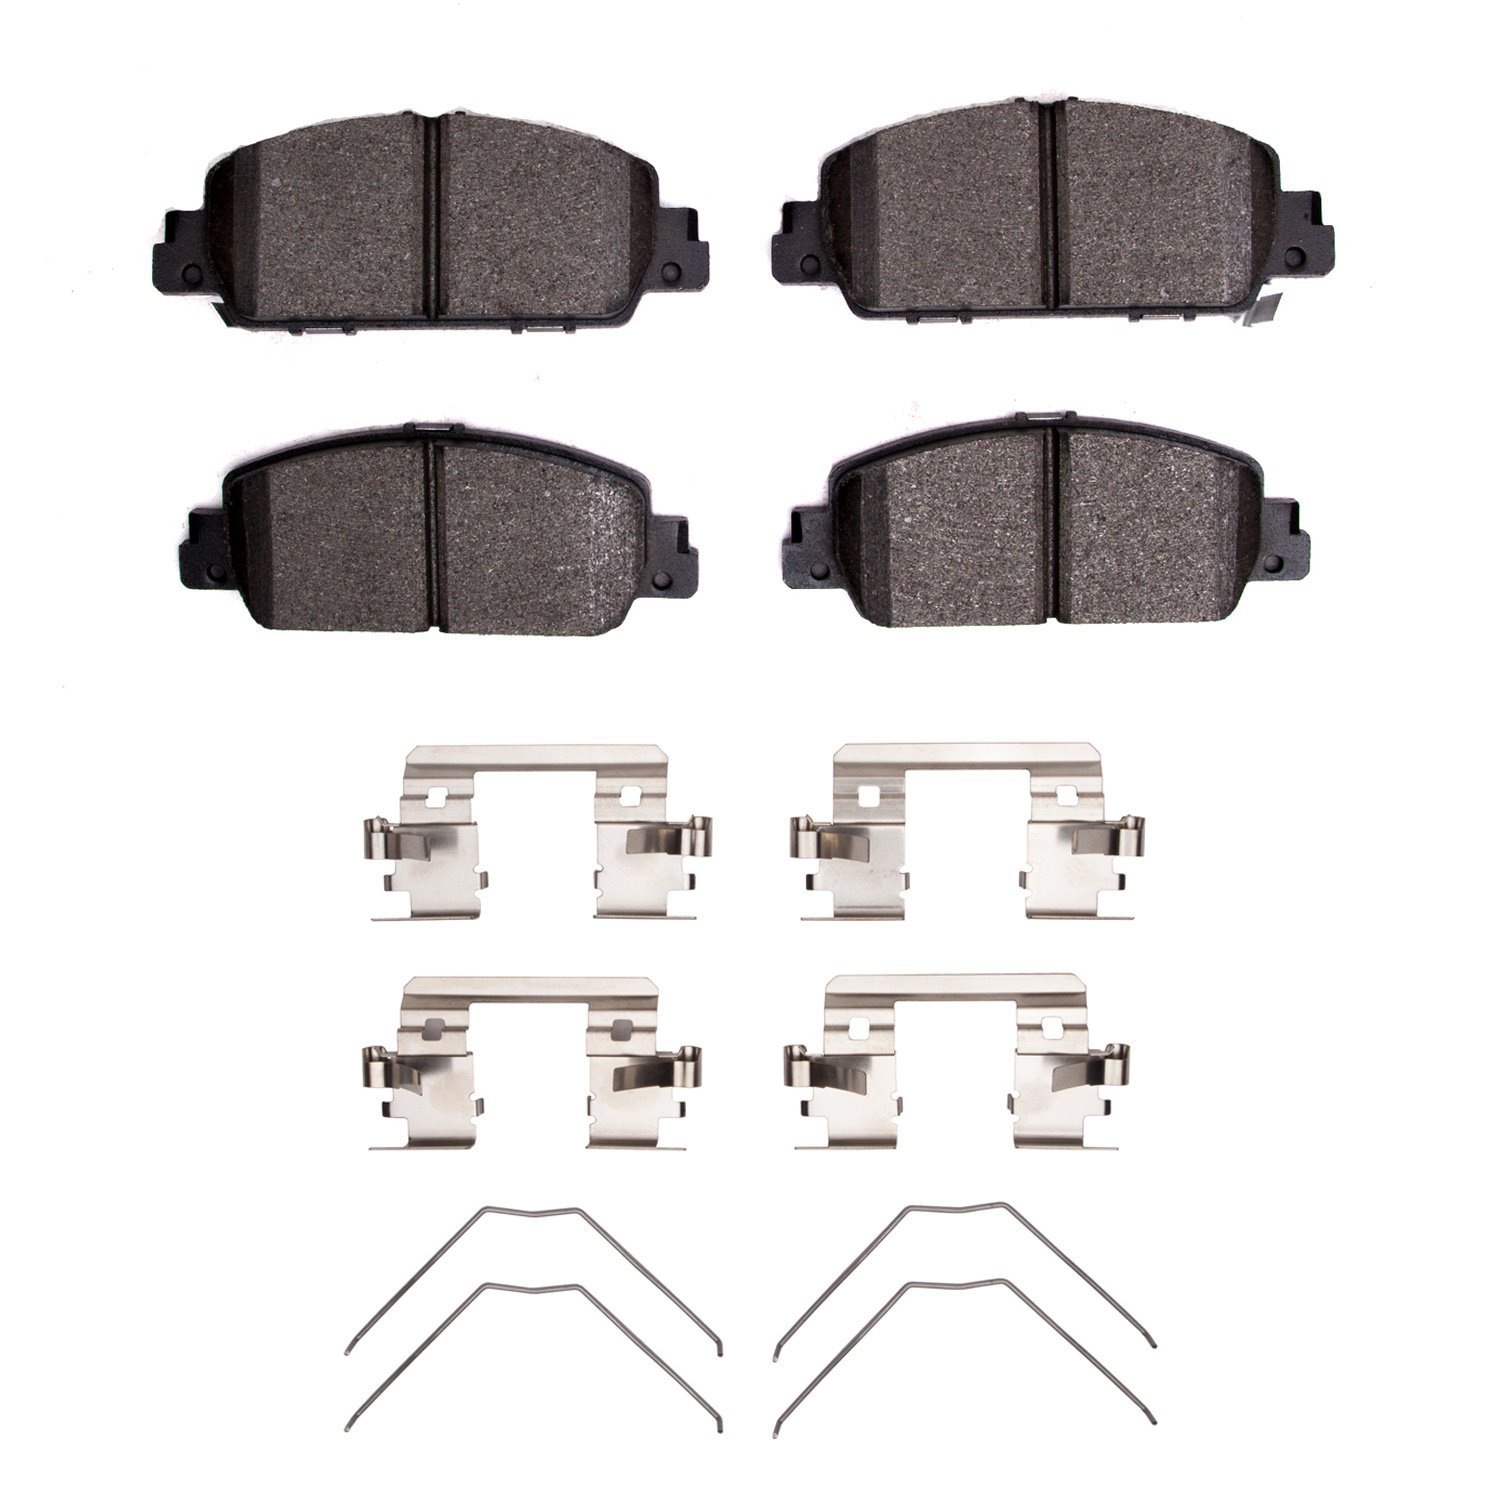 1552-1654-01 5000 Advanced Ceramic Brake Pads & Hardware Kit, Fits Select Acura/Honda, Position: Front